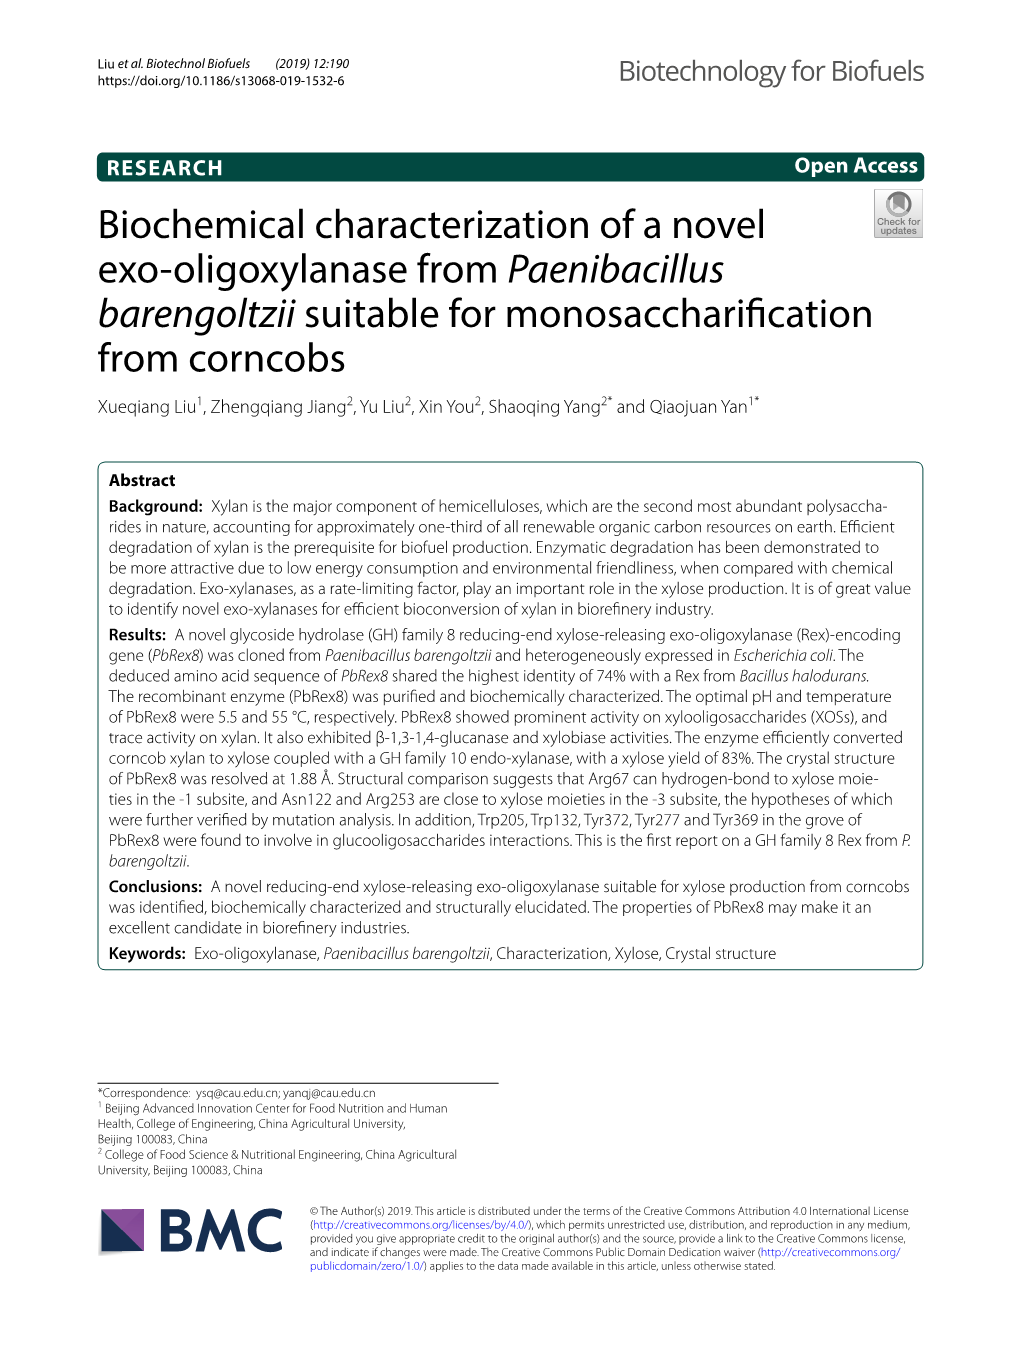 Biochemical Characterization of a Novel Exo-Oligoxylanase From